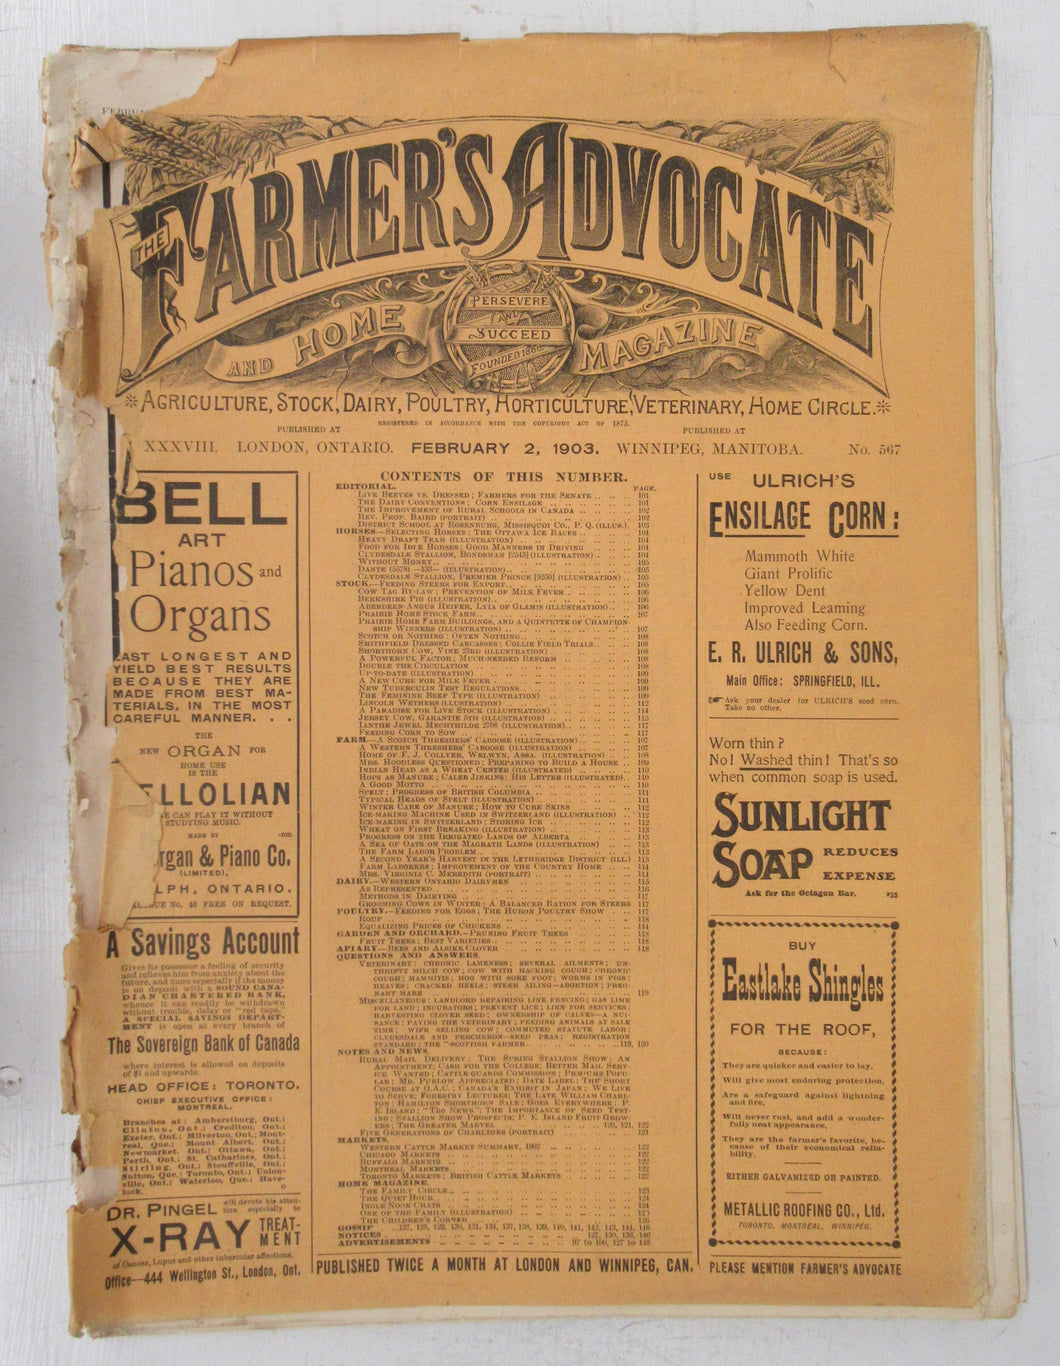 The Farmer's Advocate, February 2, 1903